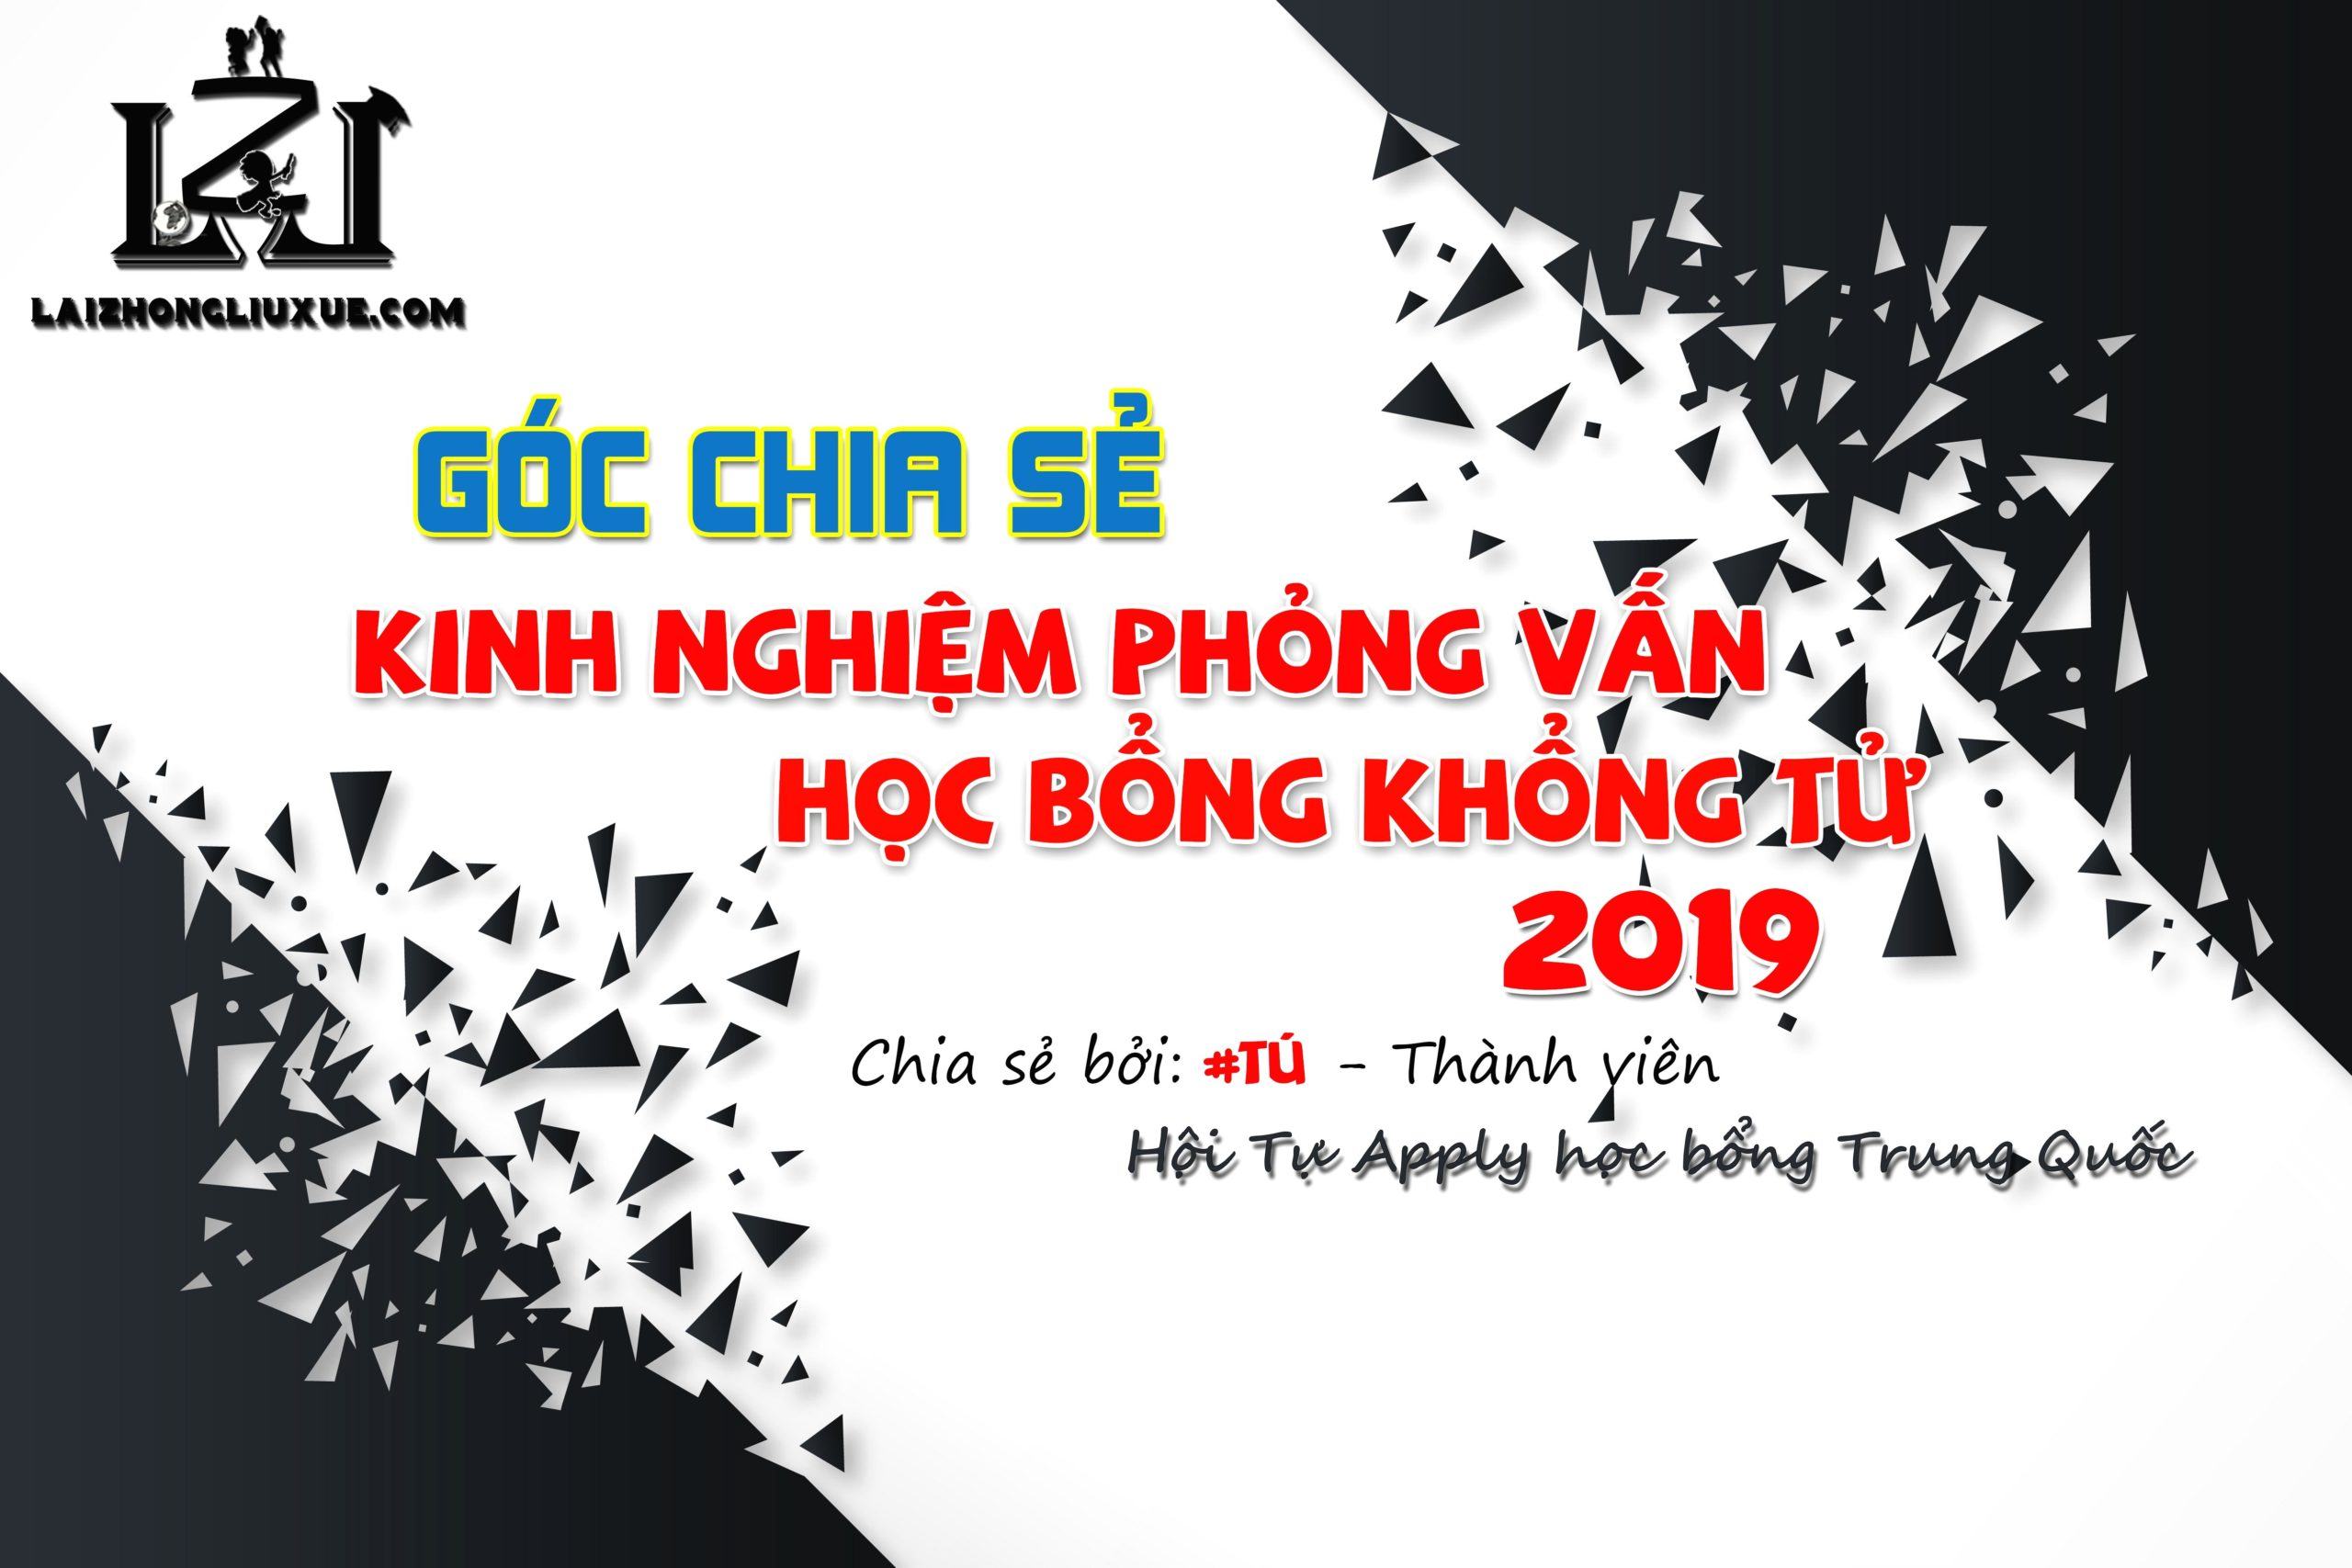 Kinh Nghiem Apply Hoc Bong Khong Tu He Mot Hoc Ky 2019 1575648154 Scaled 2022